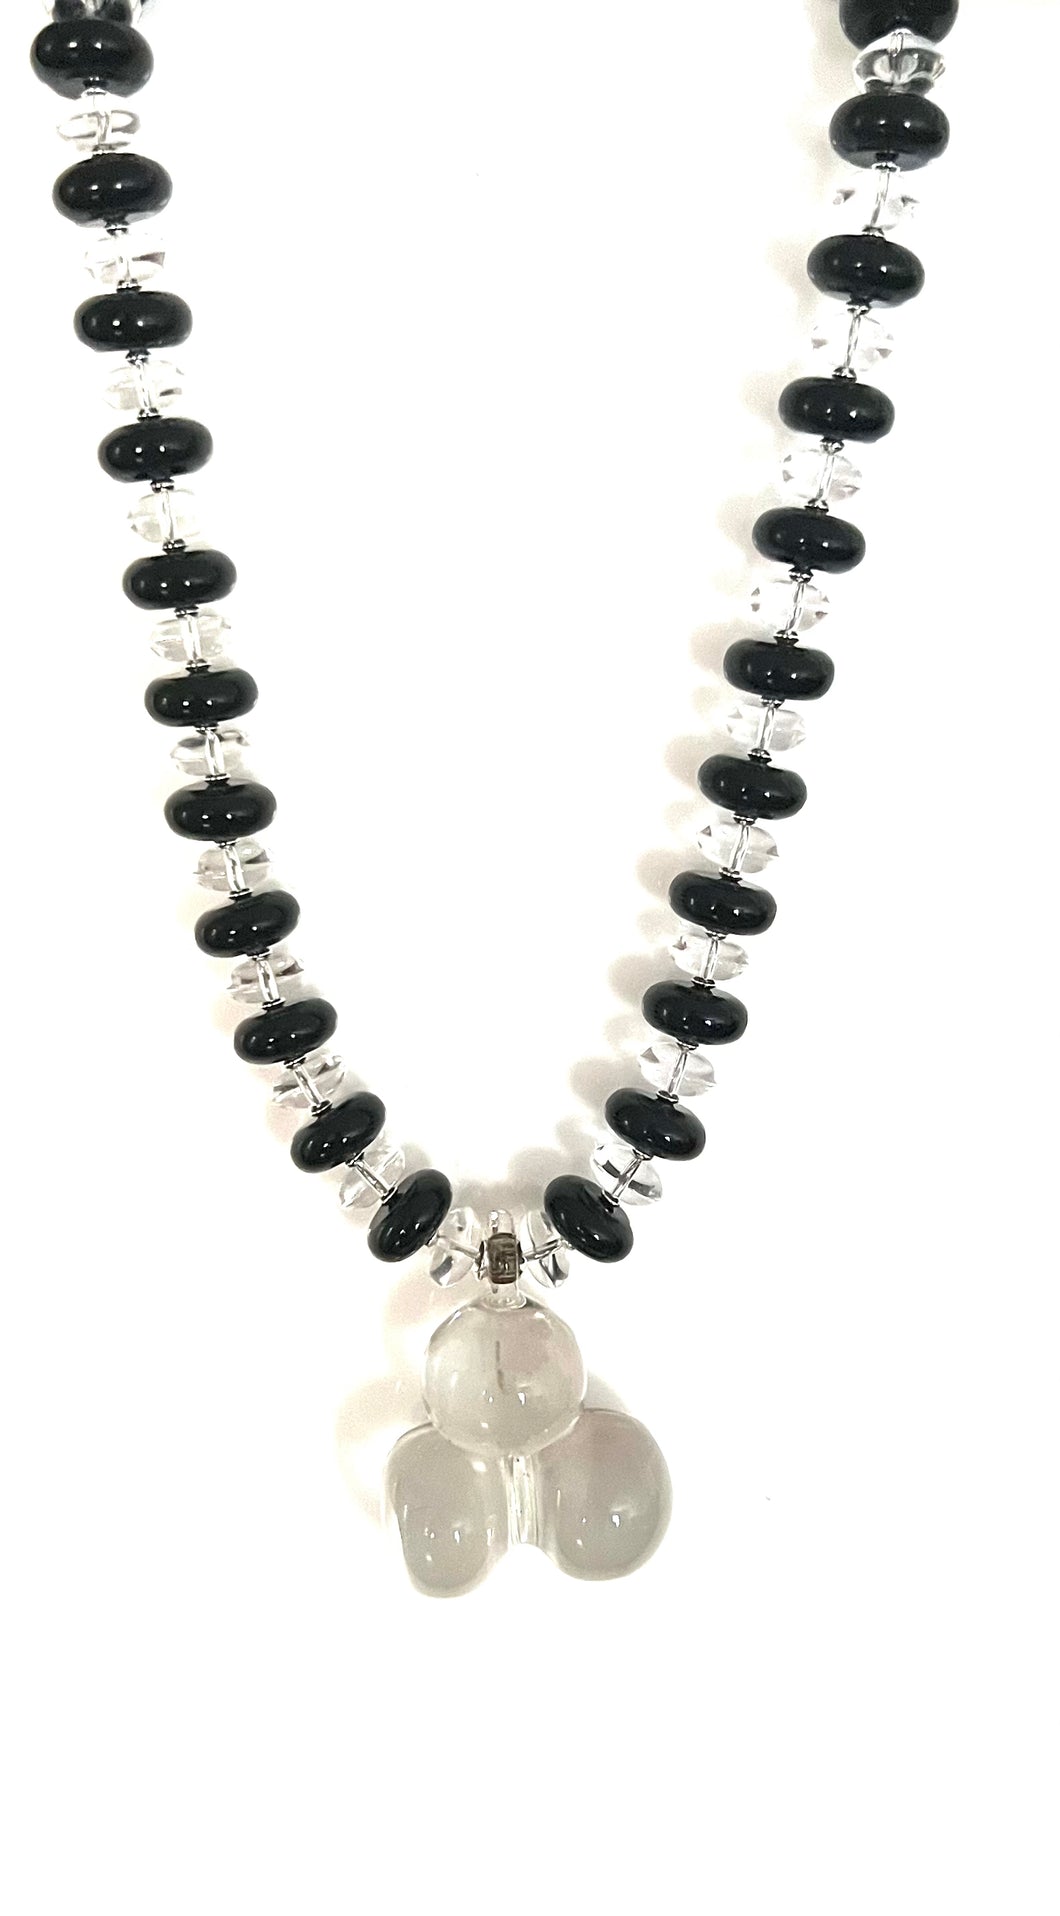 Australian Handmade Black Necklace with Onyx Crystal Quartz and Vintage Crystal Pendant